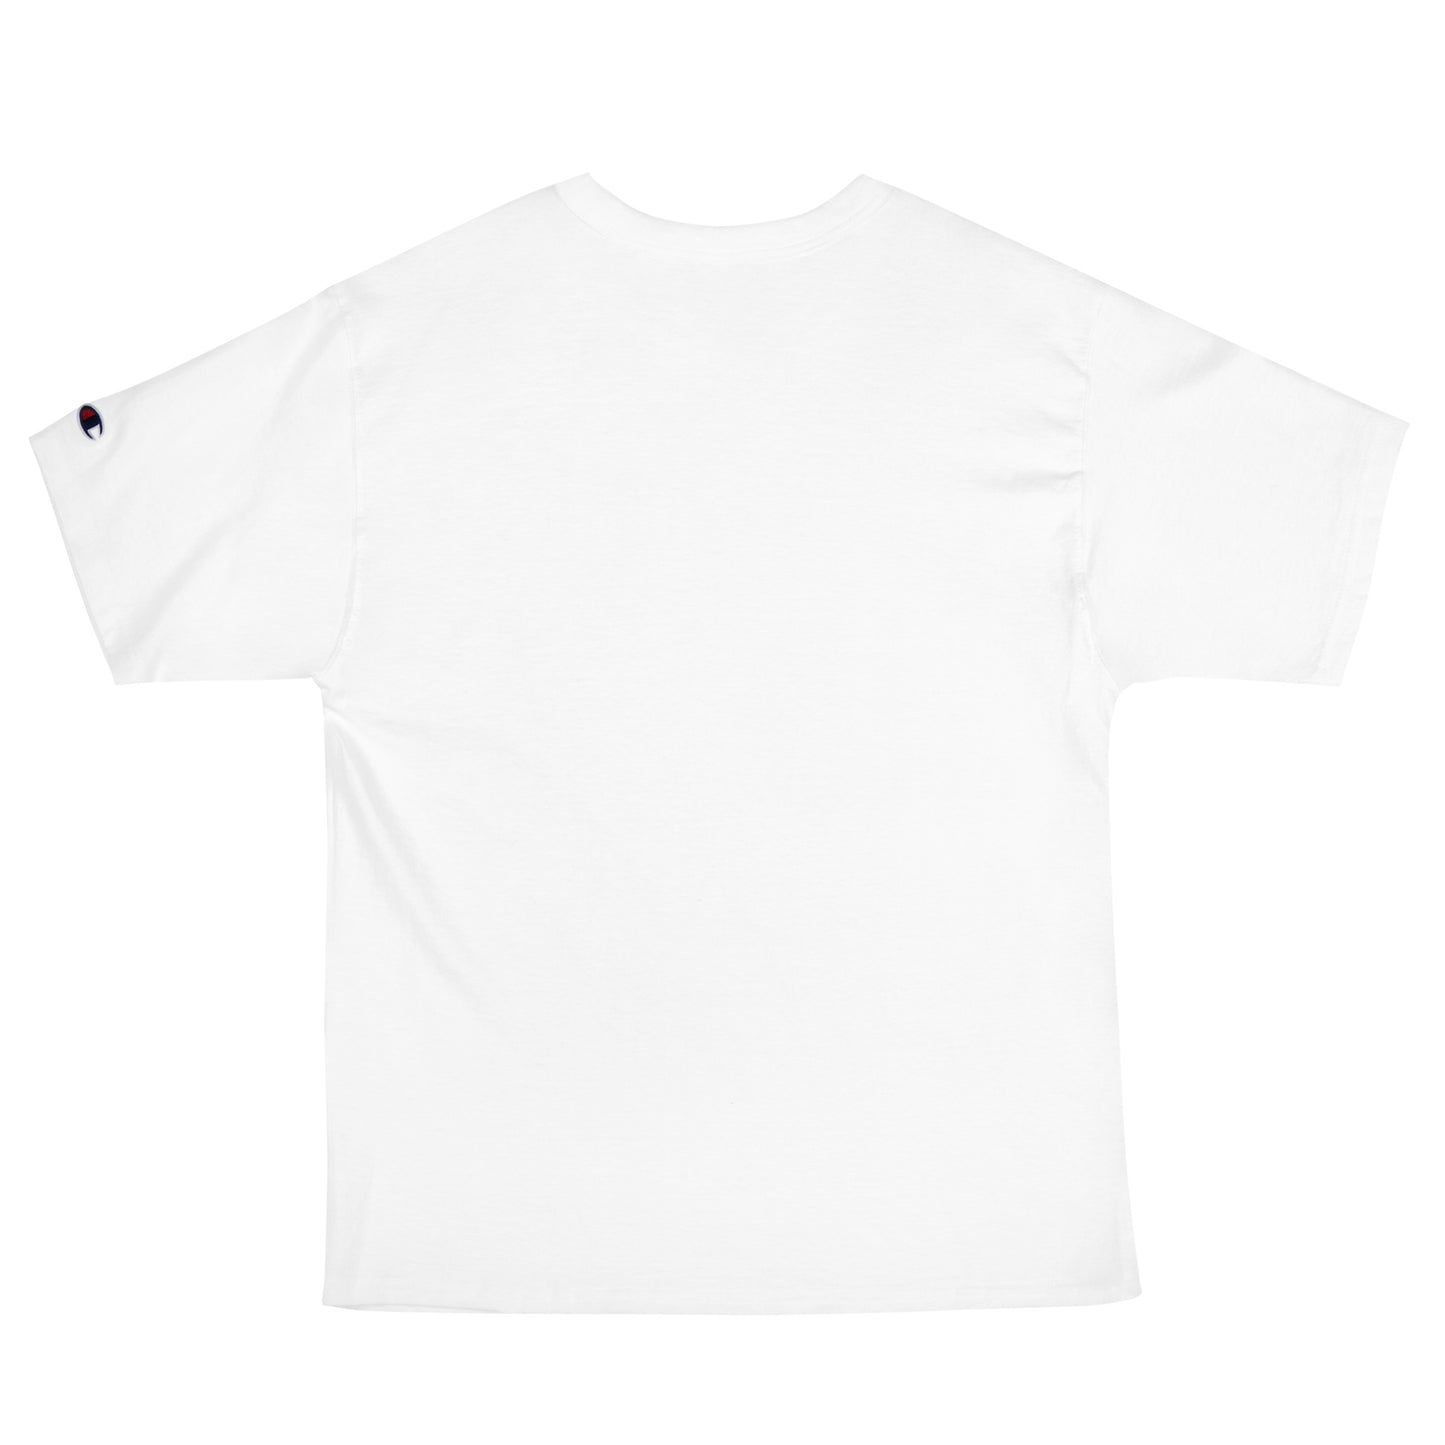 O150 - T恤/超大型/Champion (小馬駒：白色)